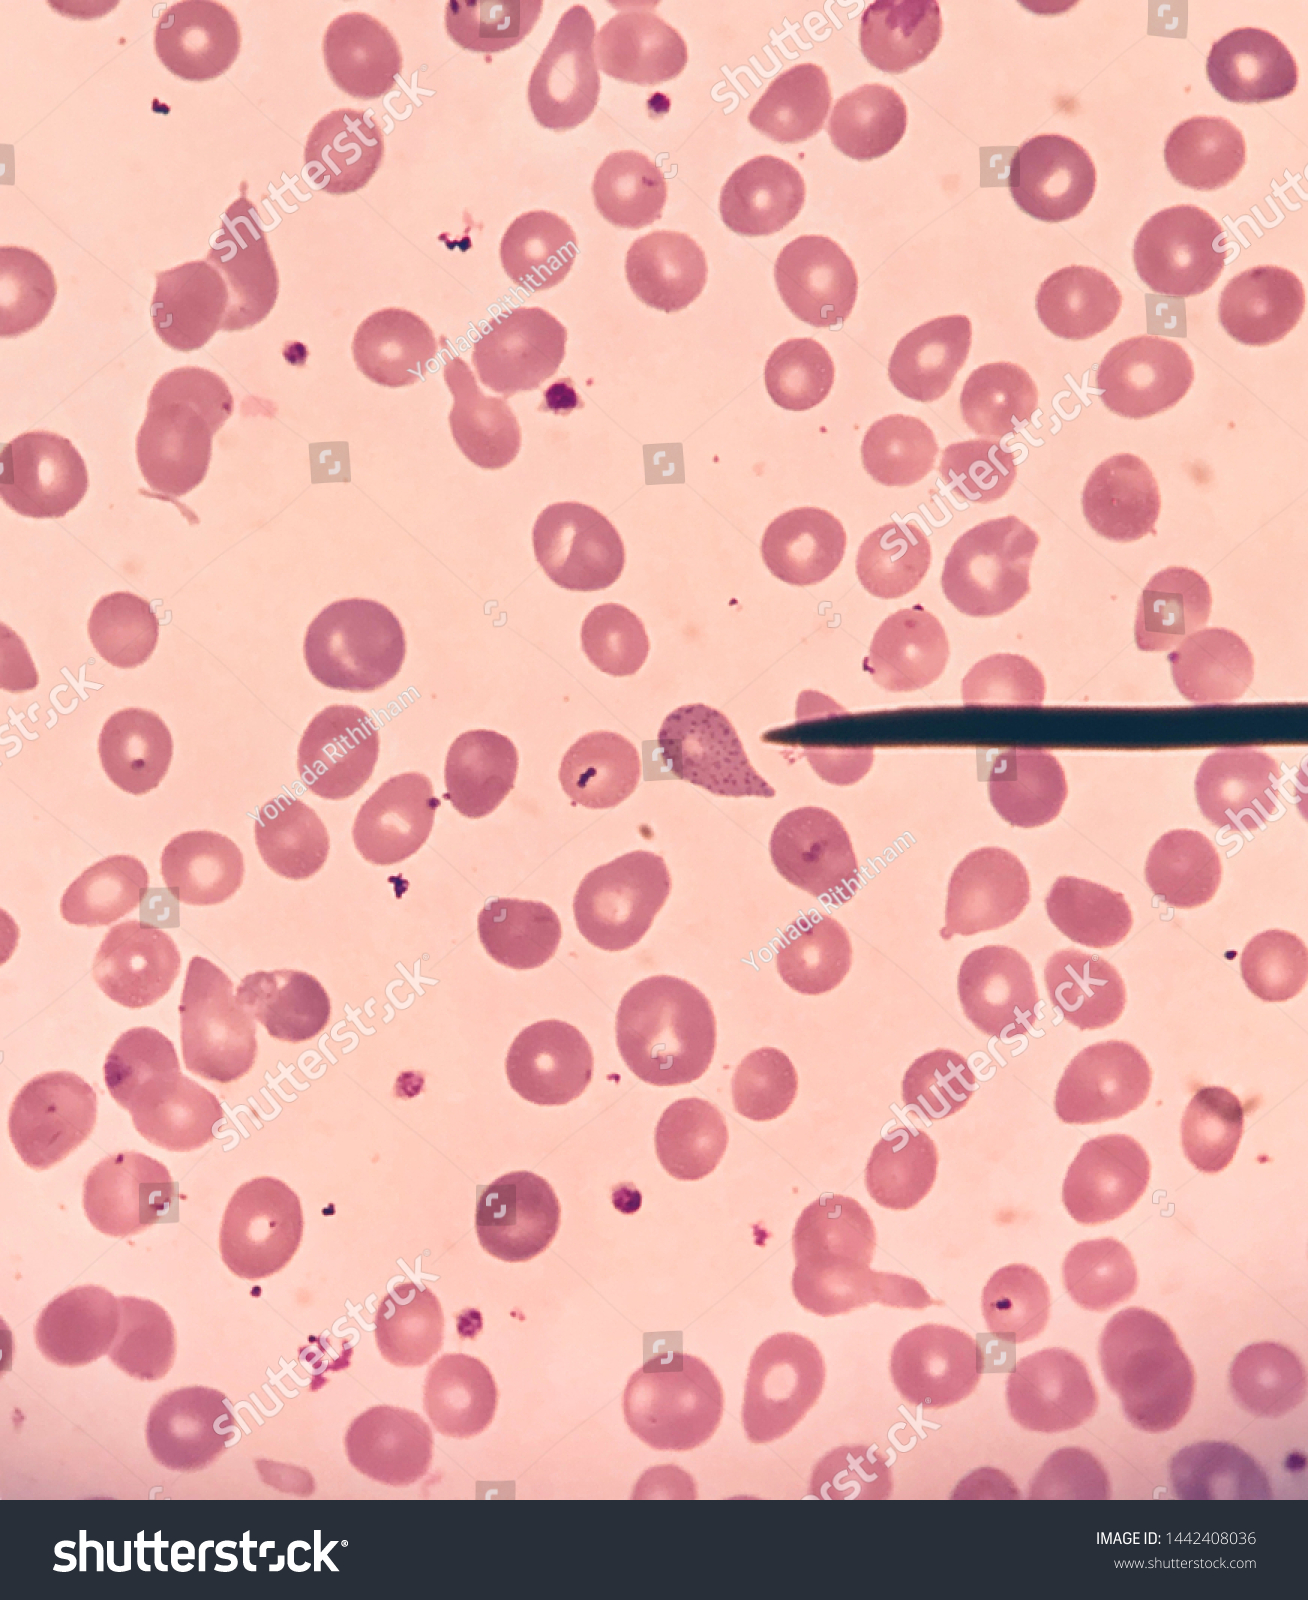 basophilic stippling thalassemia